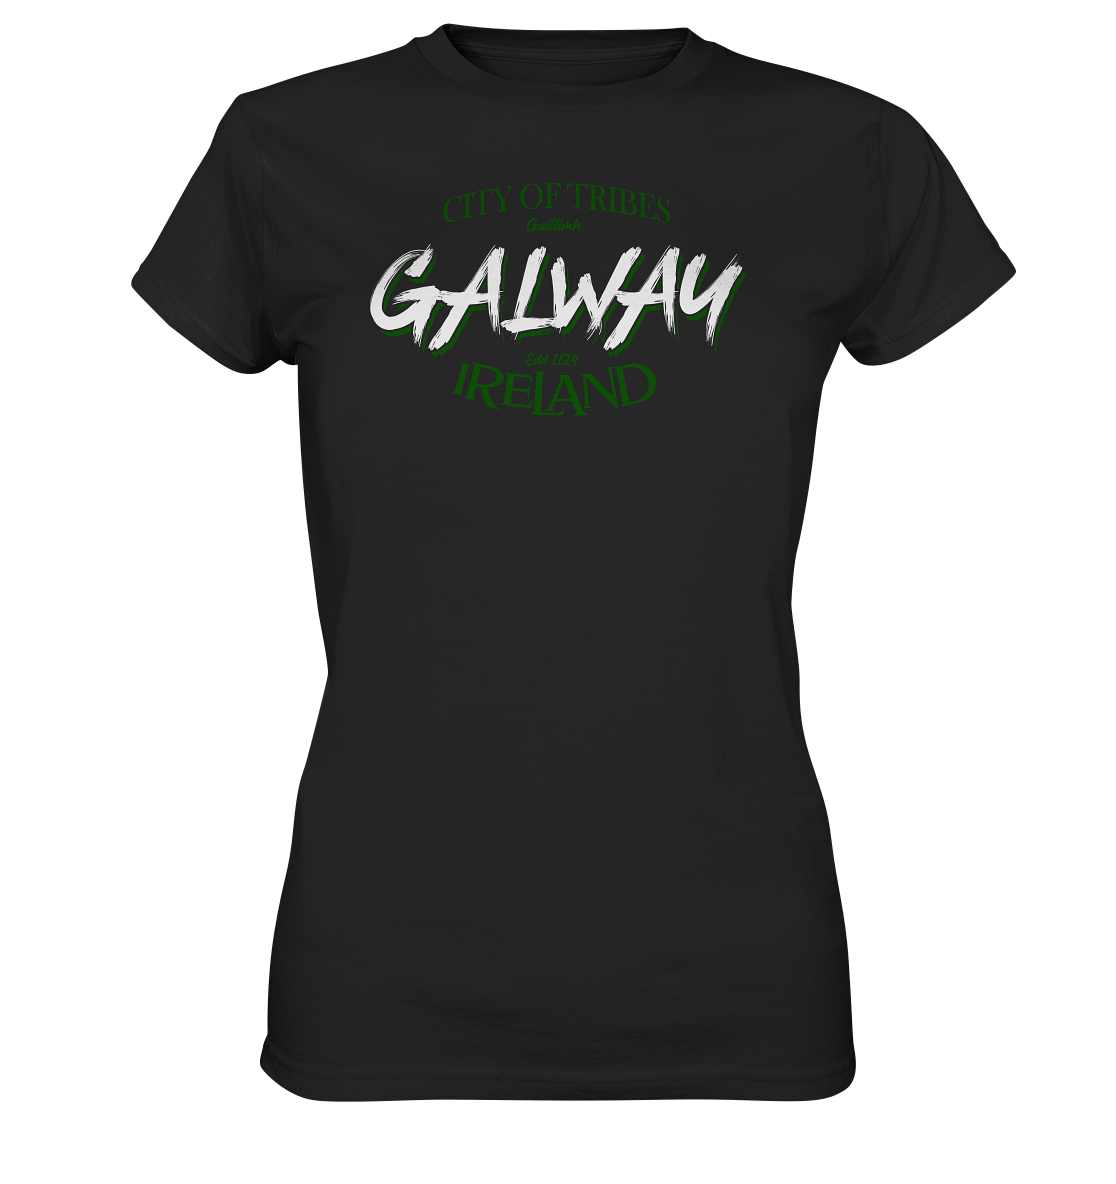 Galway "City Of Tribes" - Ladies Premium Shirt